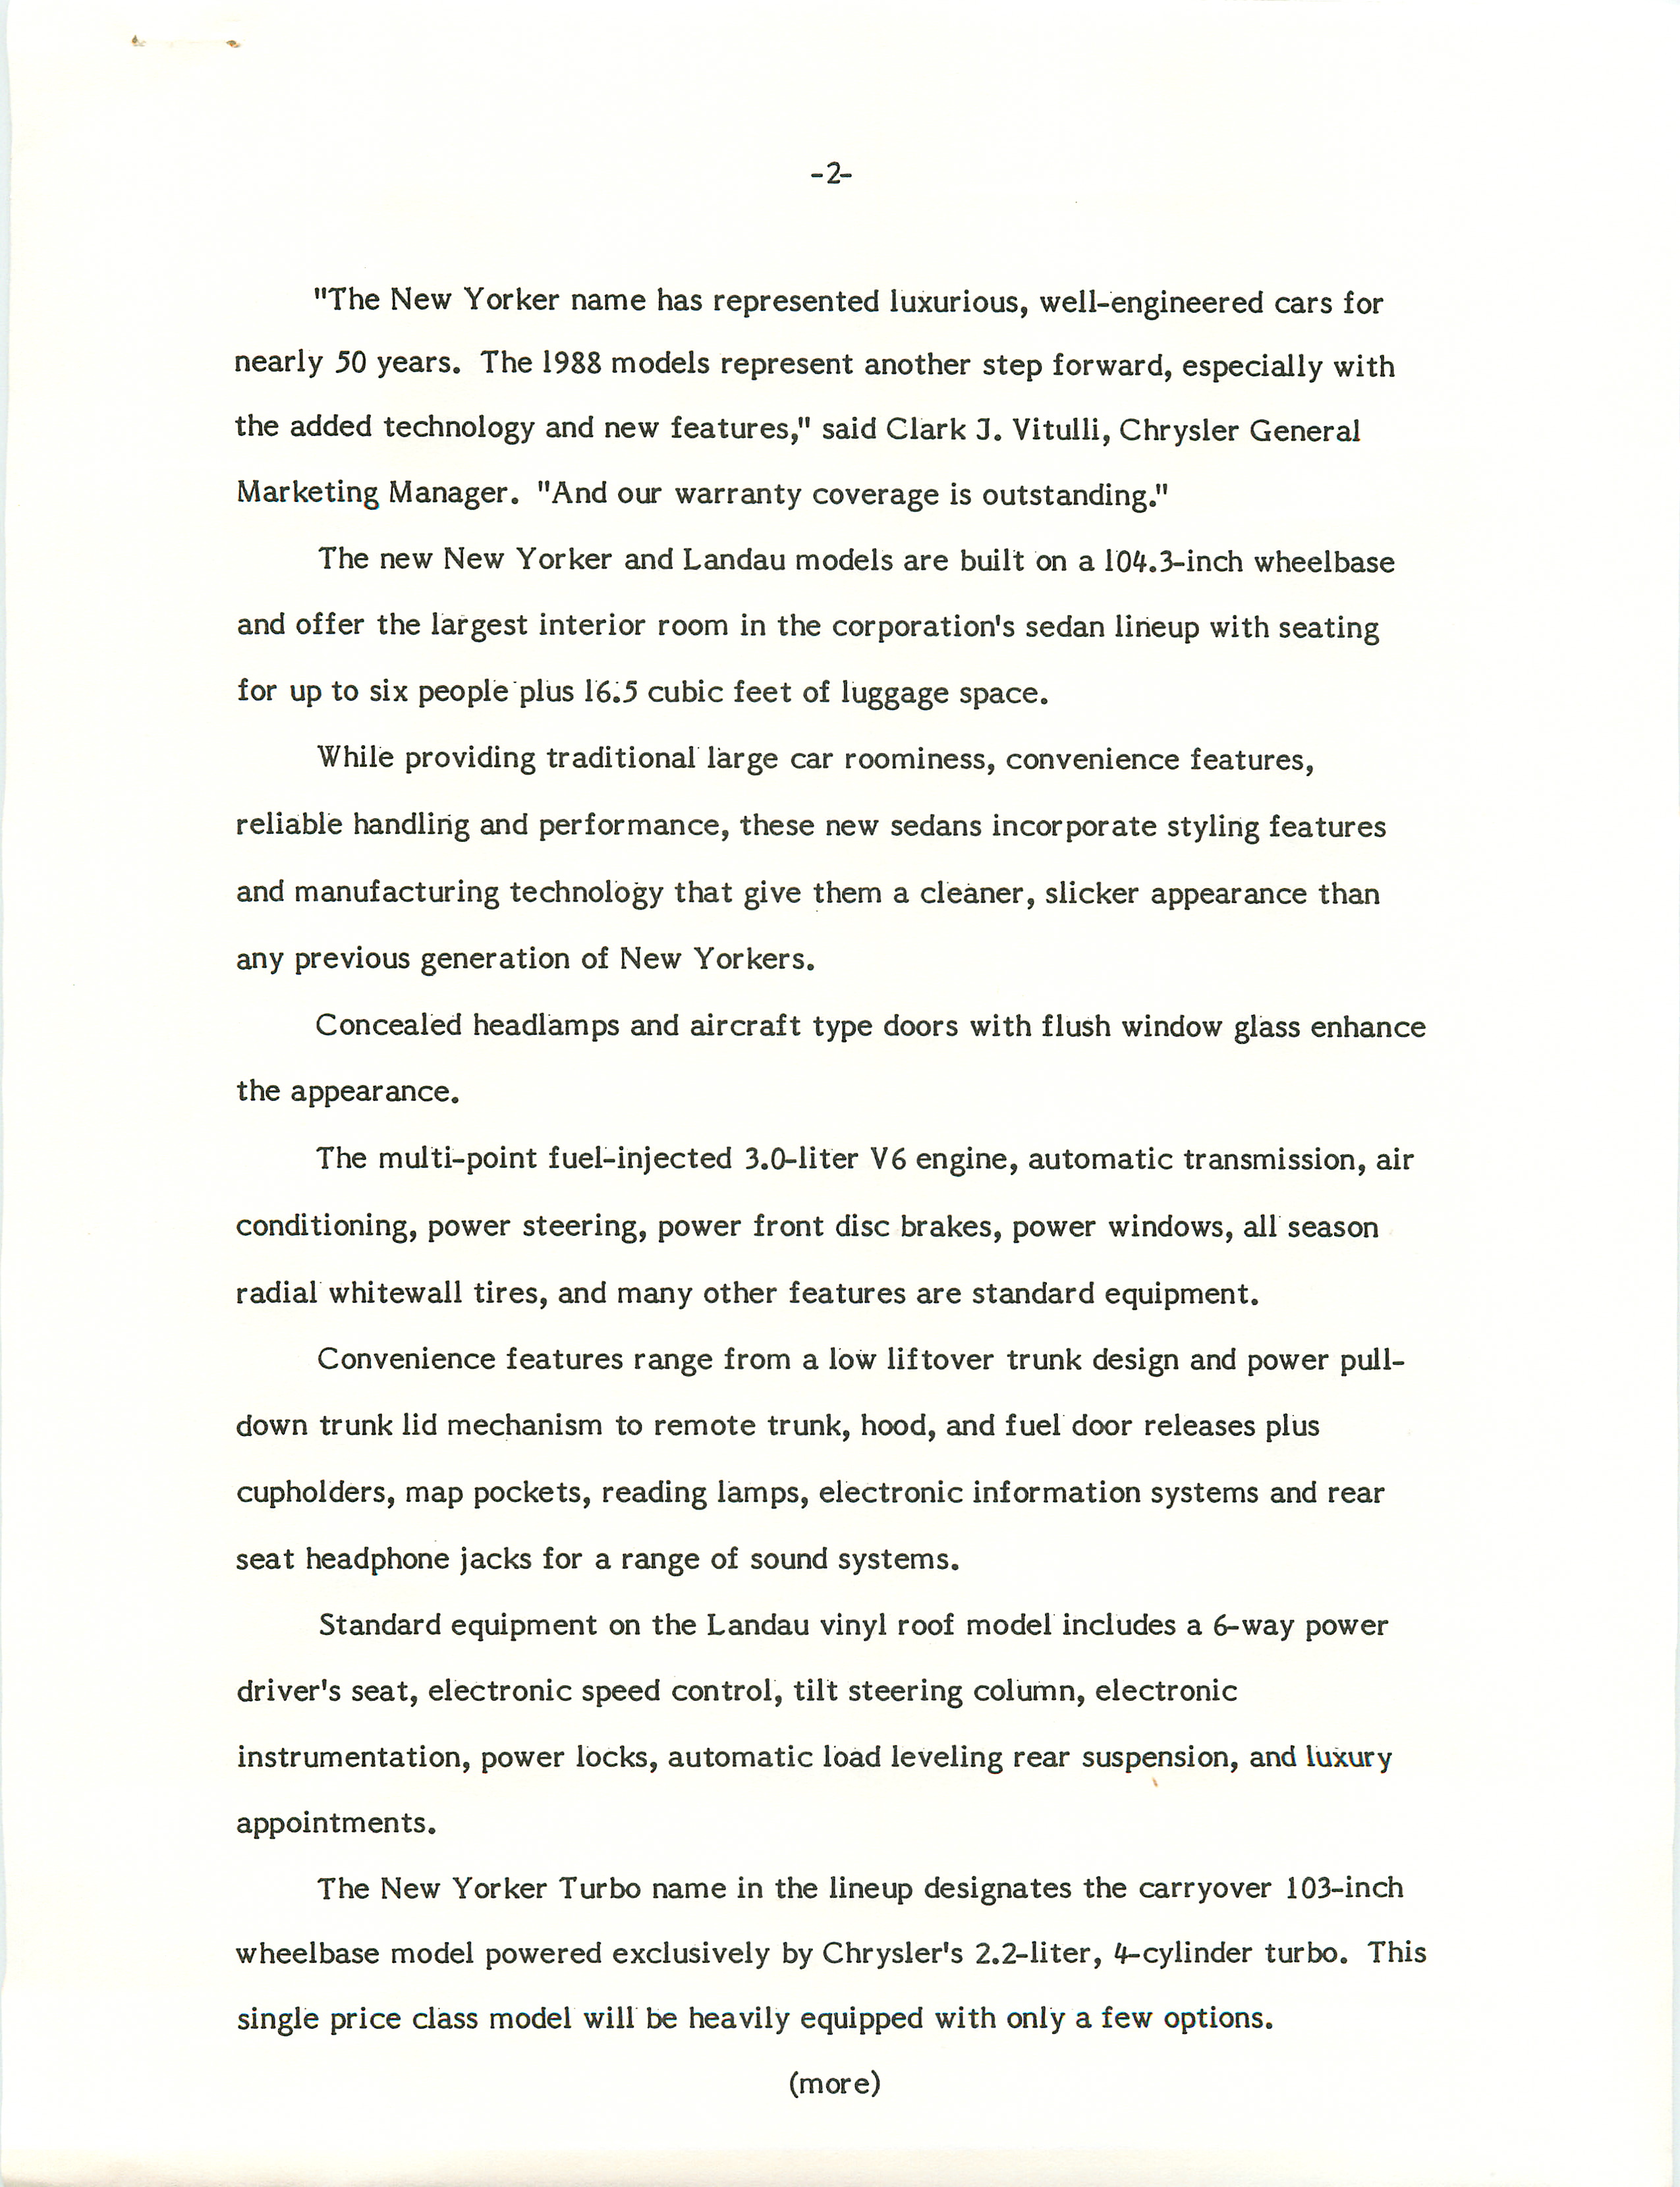 1988 Chrysler Intro Press Release-07